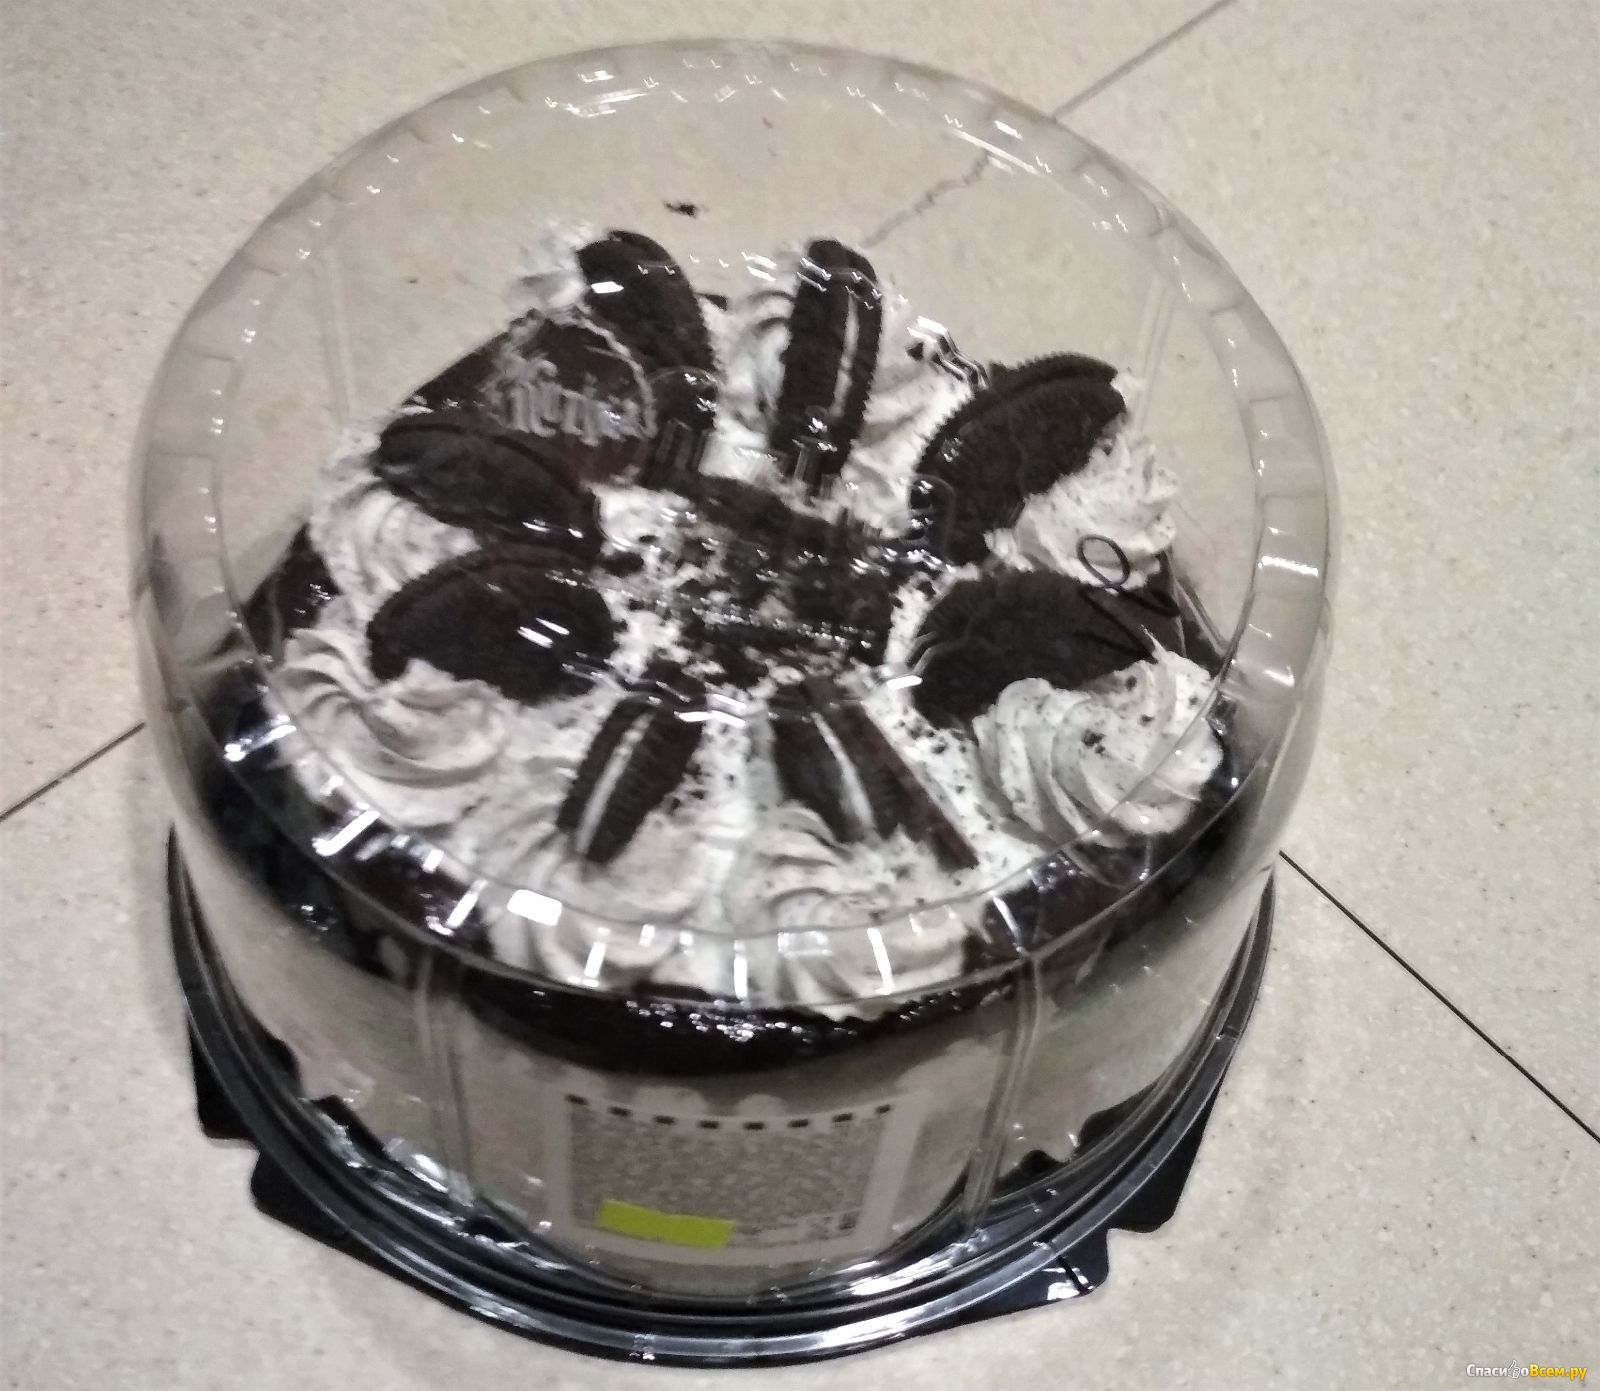 Торт орион рецепт с фото пошагово в домашних условиях